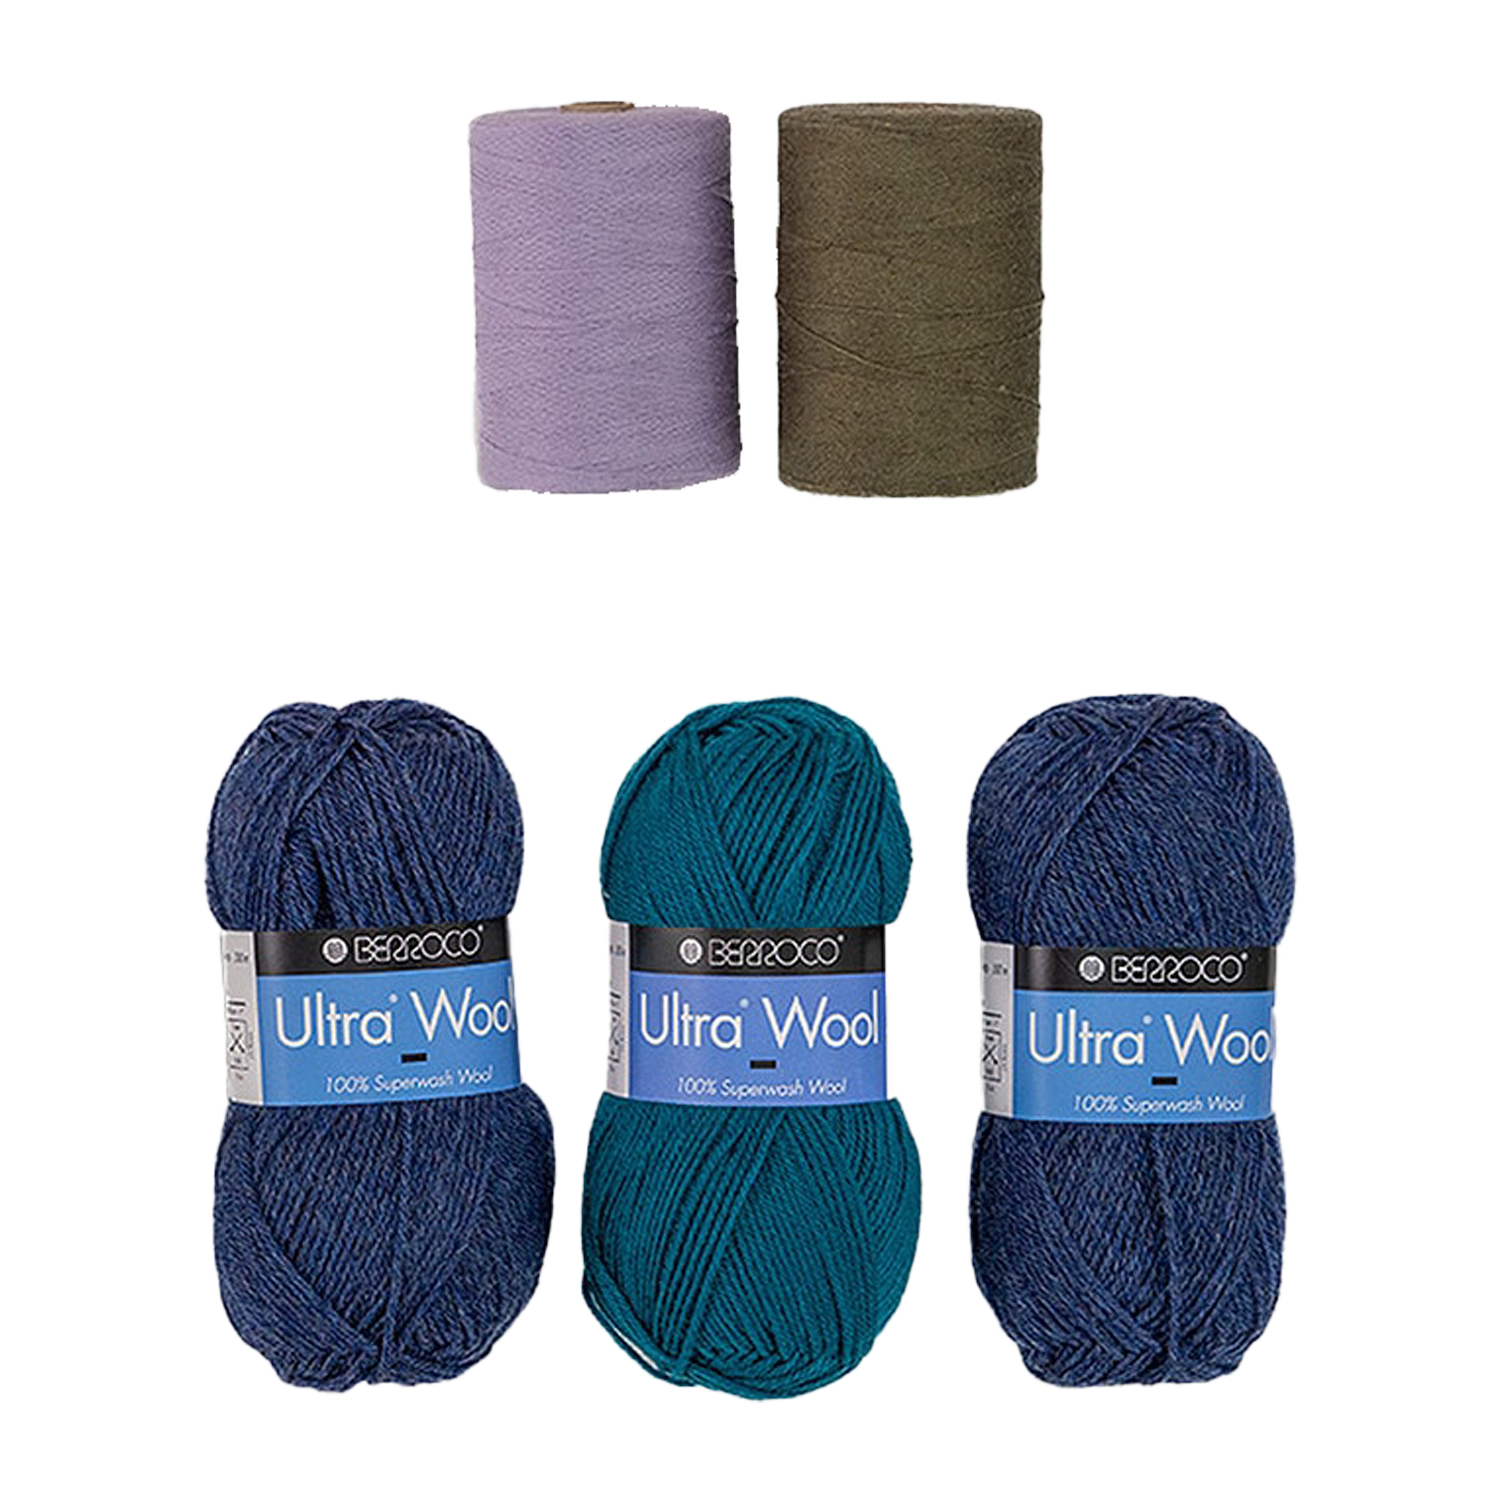 Schacht Mini Loom Weaving Kit – Susan's Fiber Shop